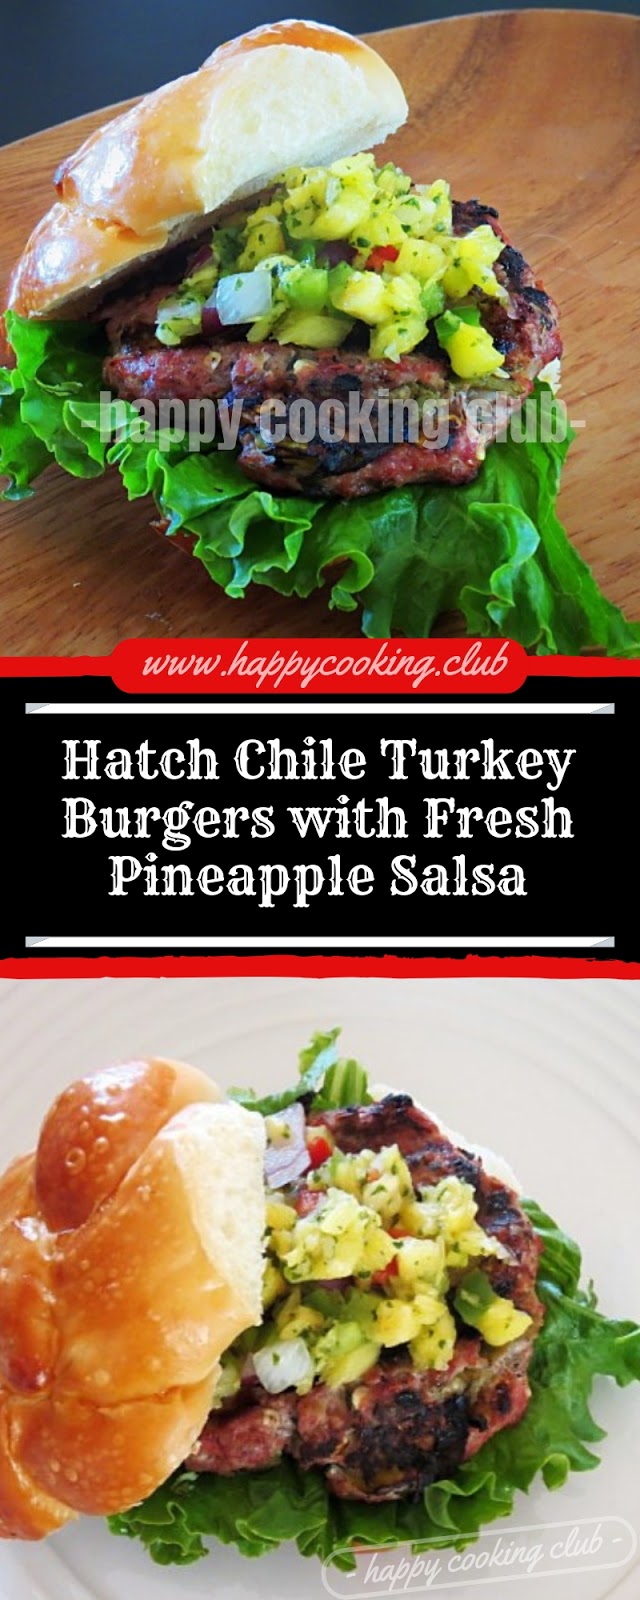 Hatch Chile Turkey Burgers with Fresh Pineapple Salsa